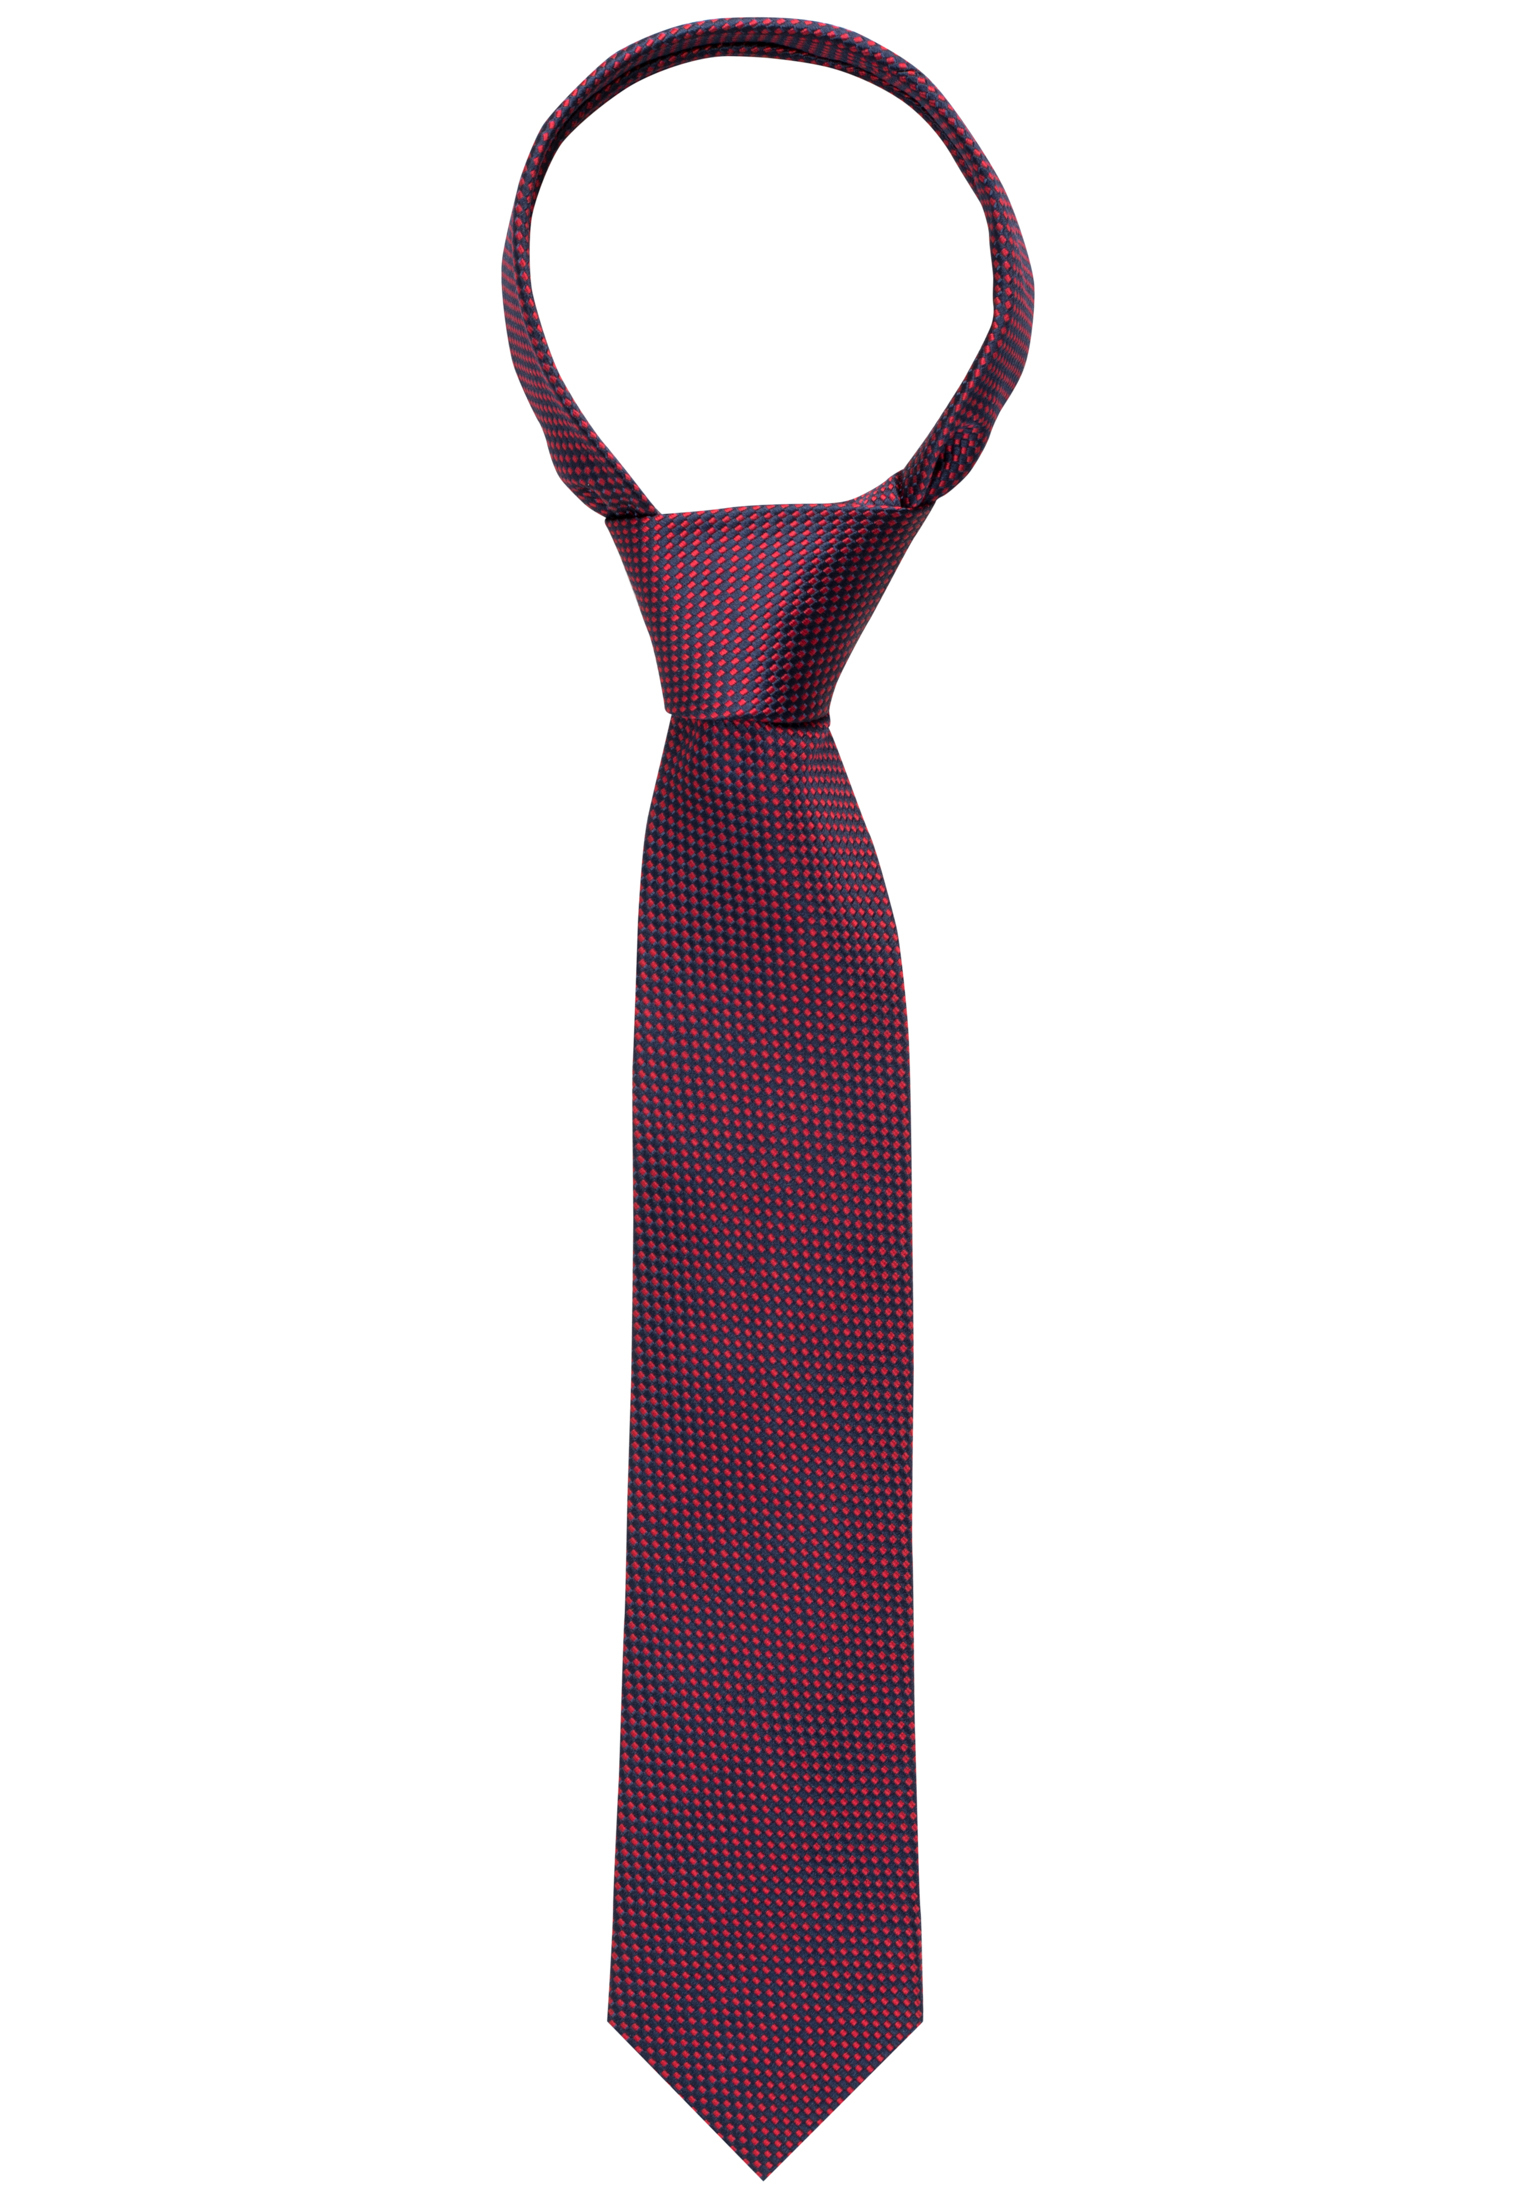 Krawatte in navy/rot | 1AC00534-81-89-142 strukturiert | navy/rot 142 